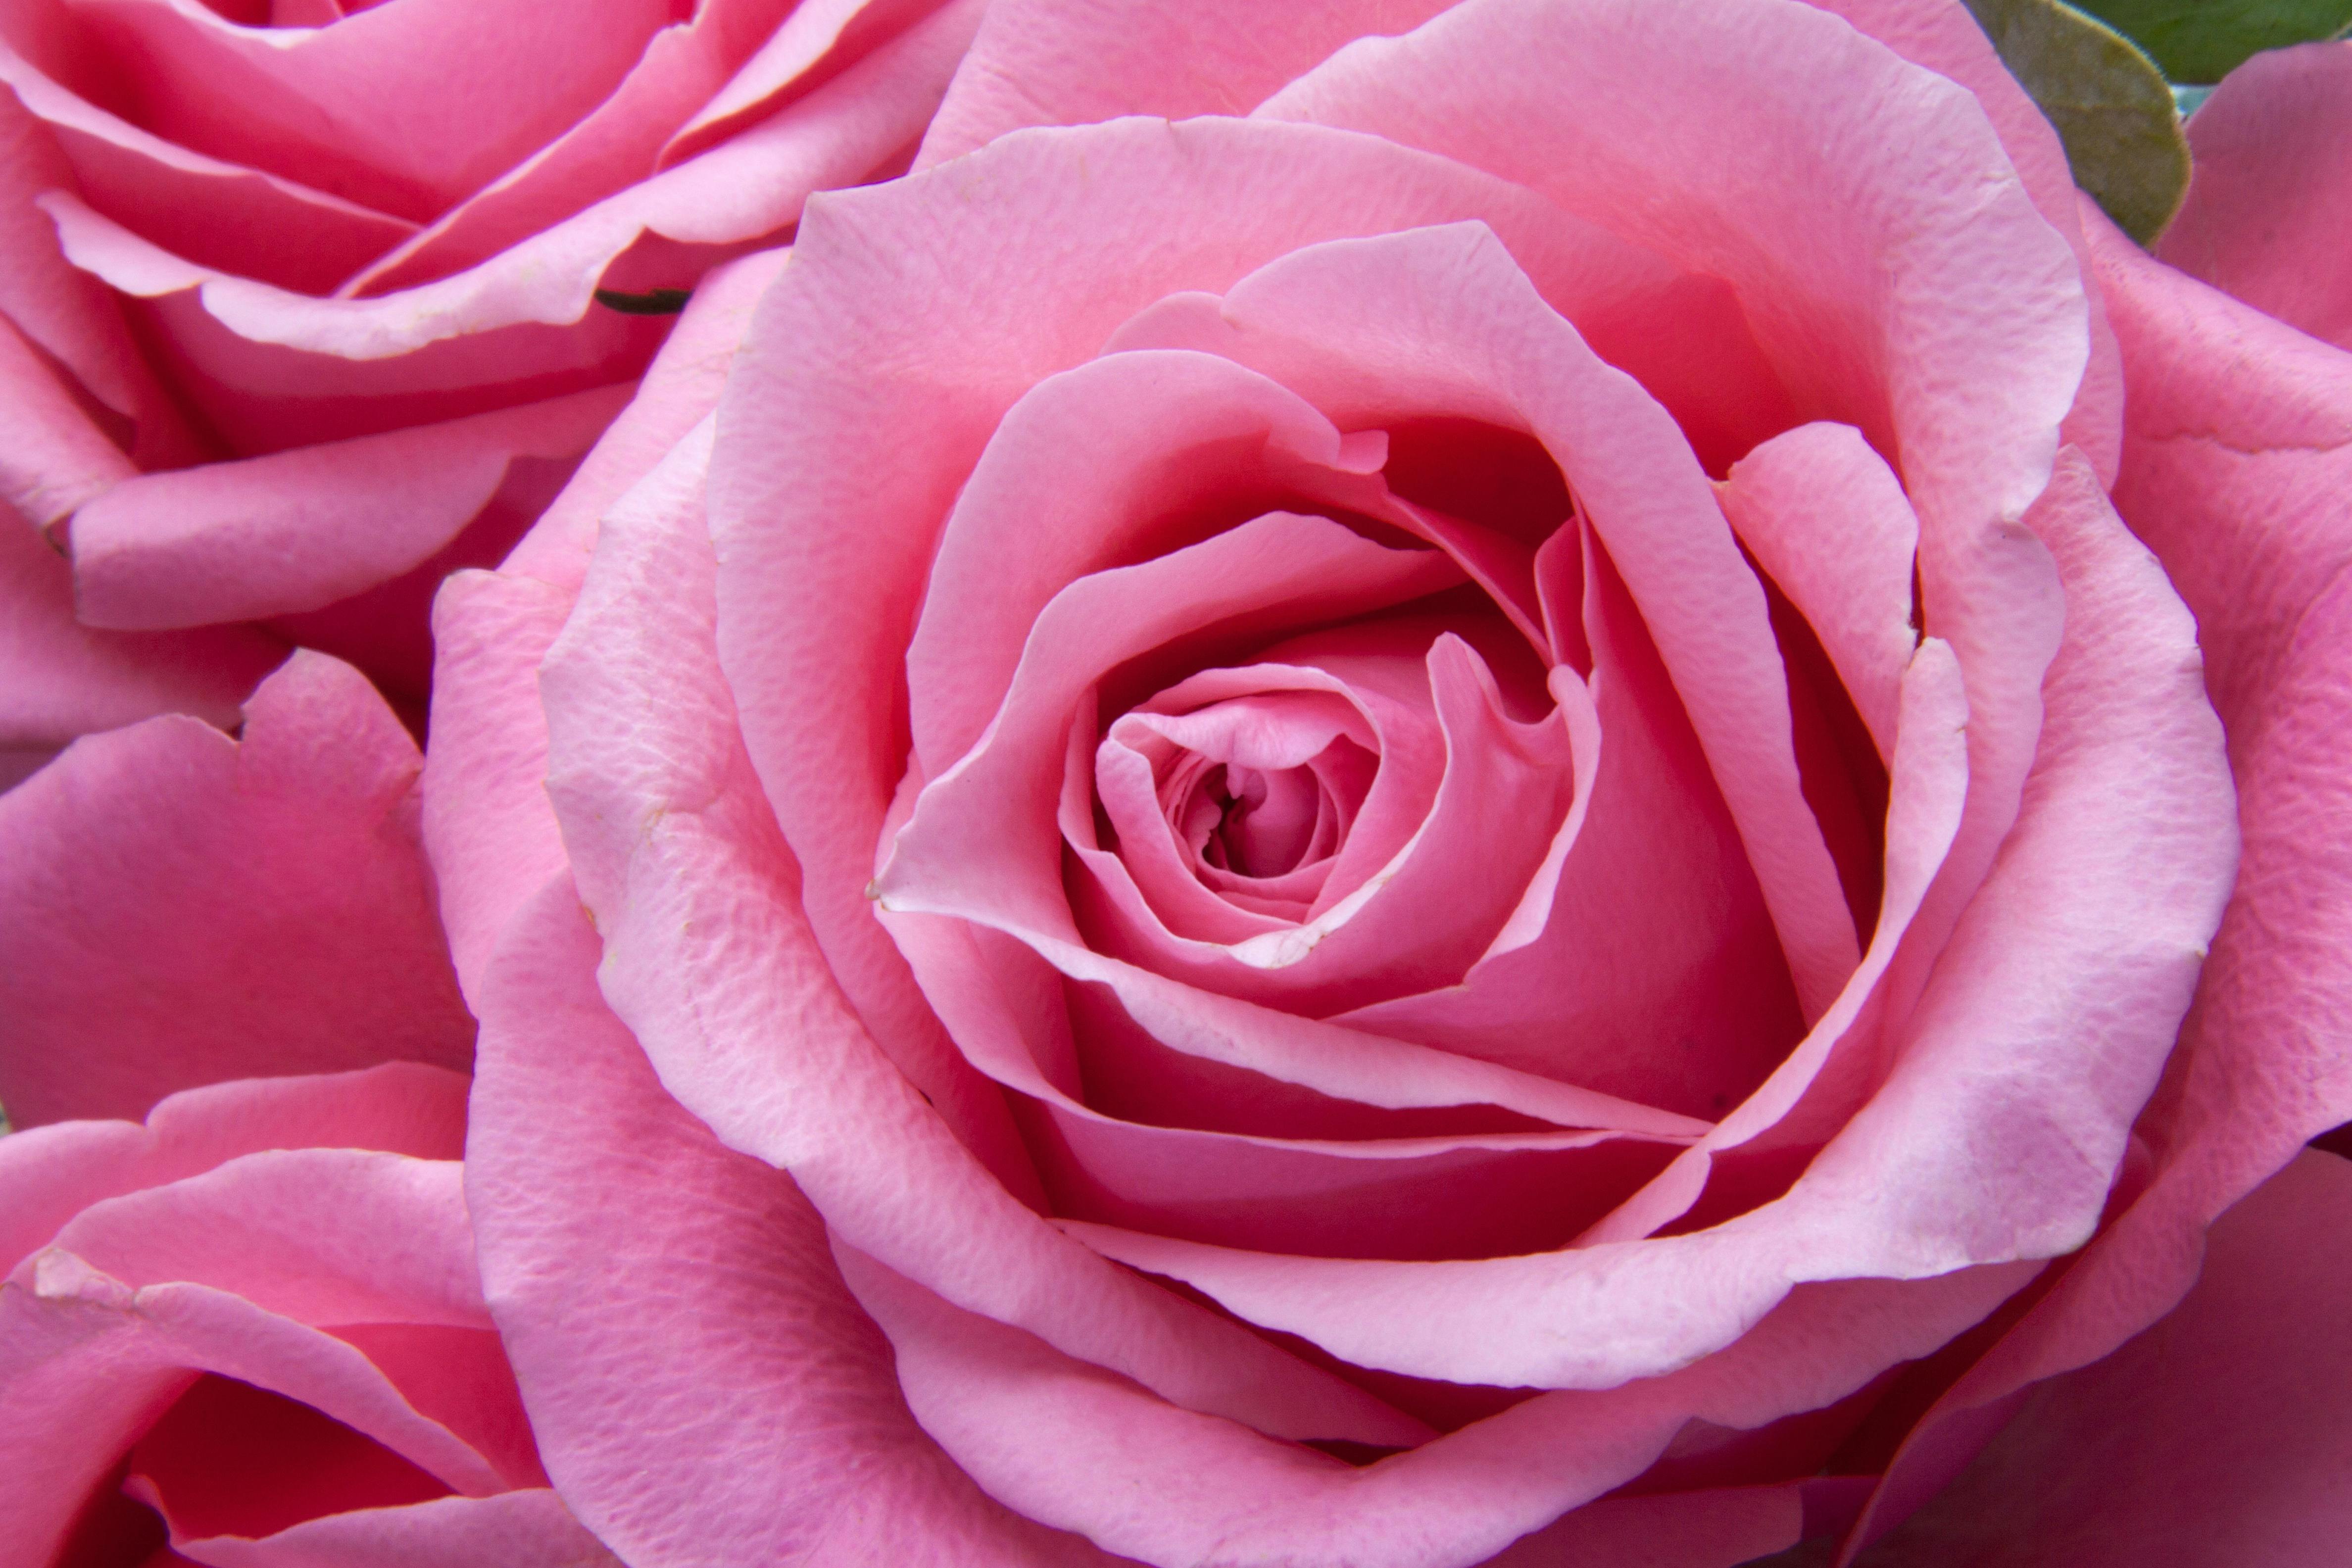 roses-pink-family-rose-family-65619.jpeg (4752×3168)